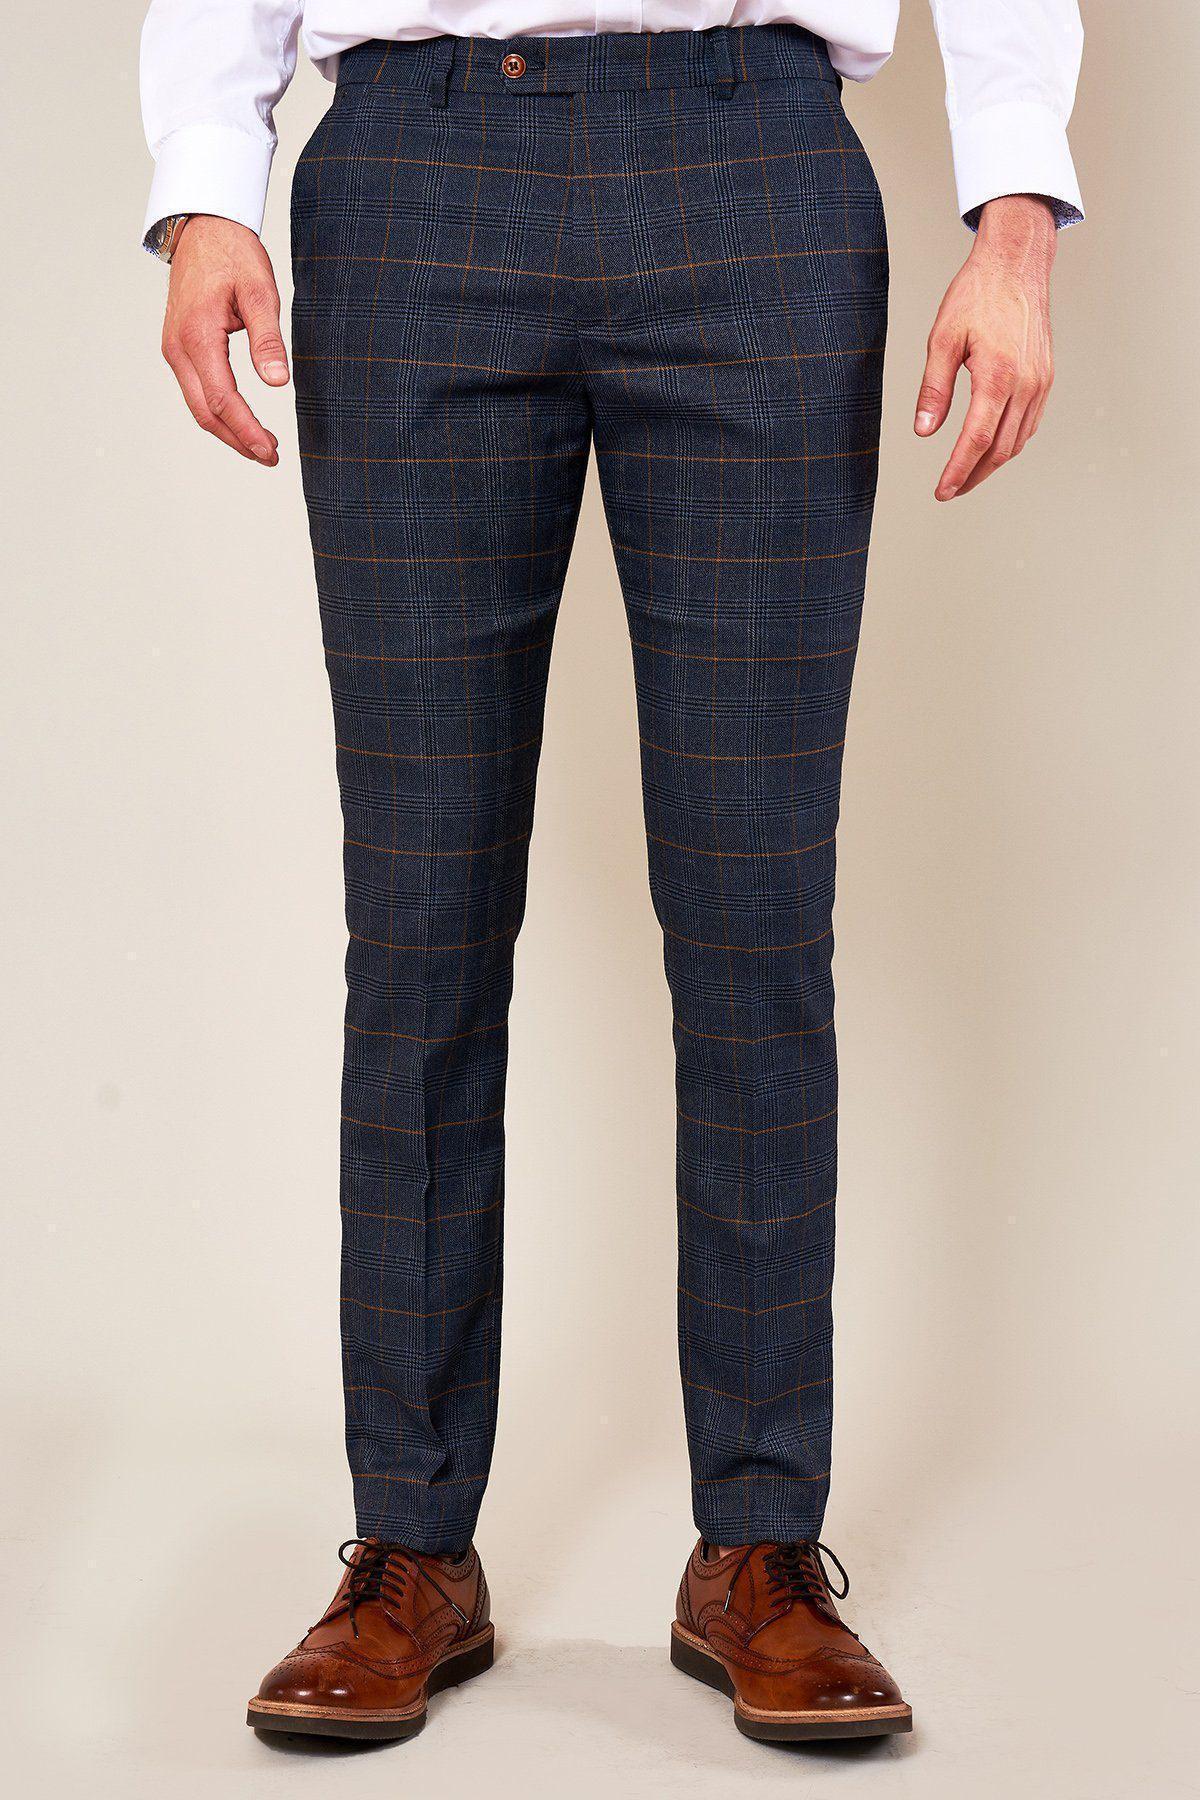 New Look skinny check trousers in brown | ASOS